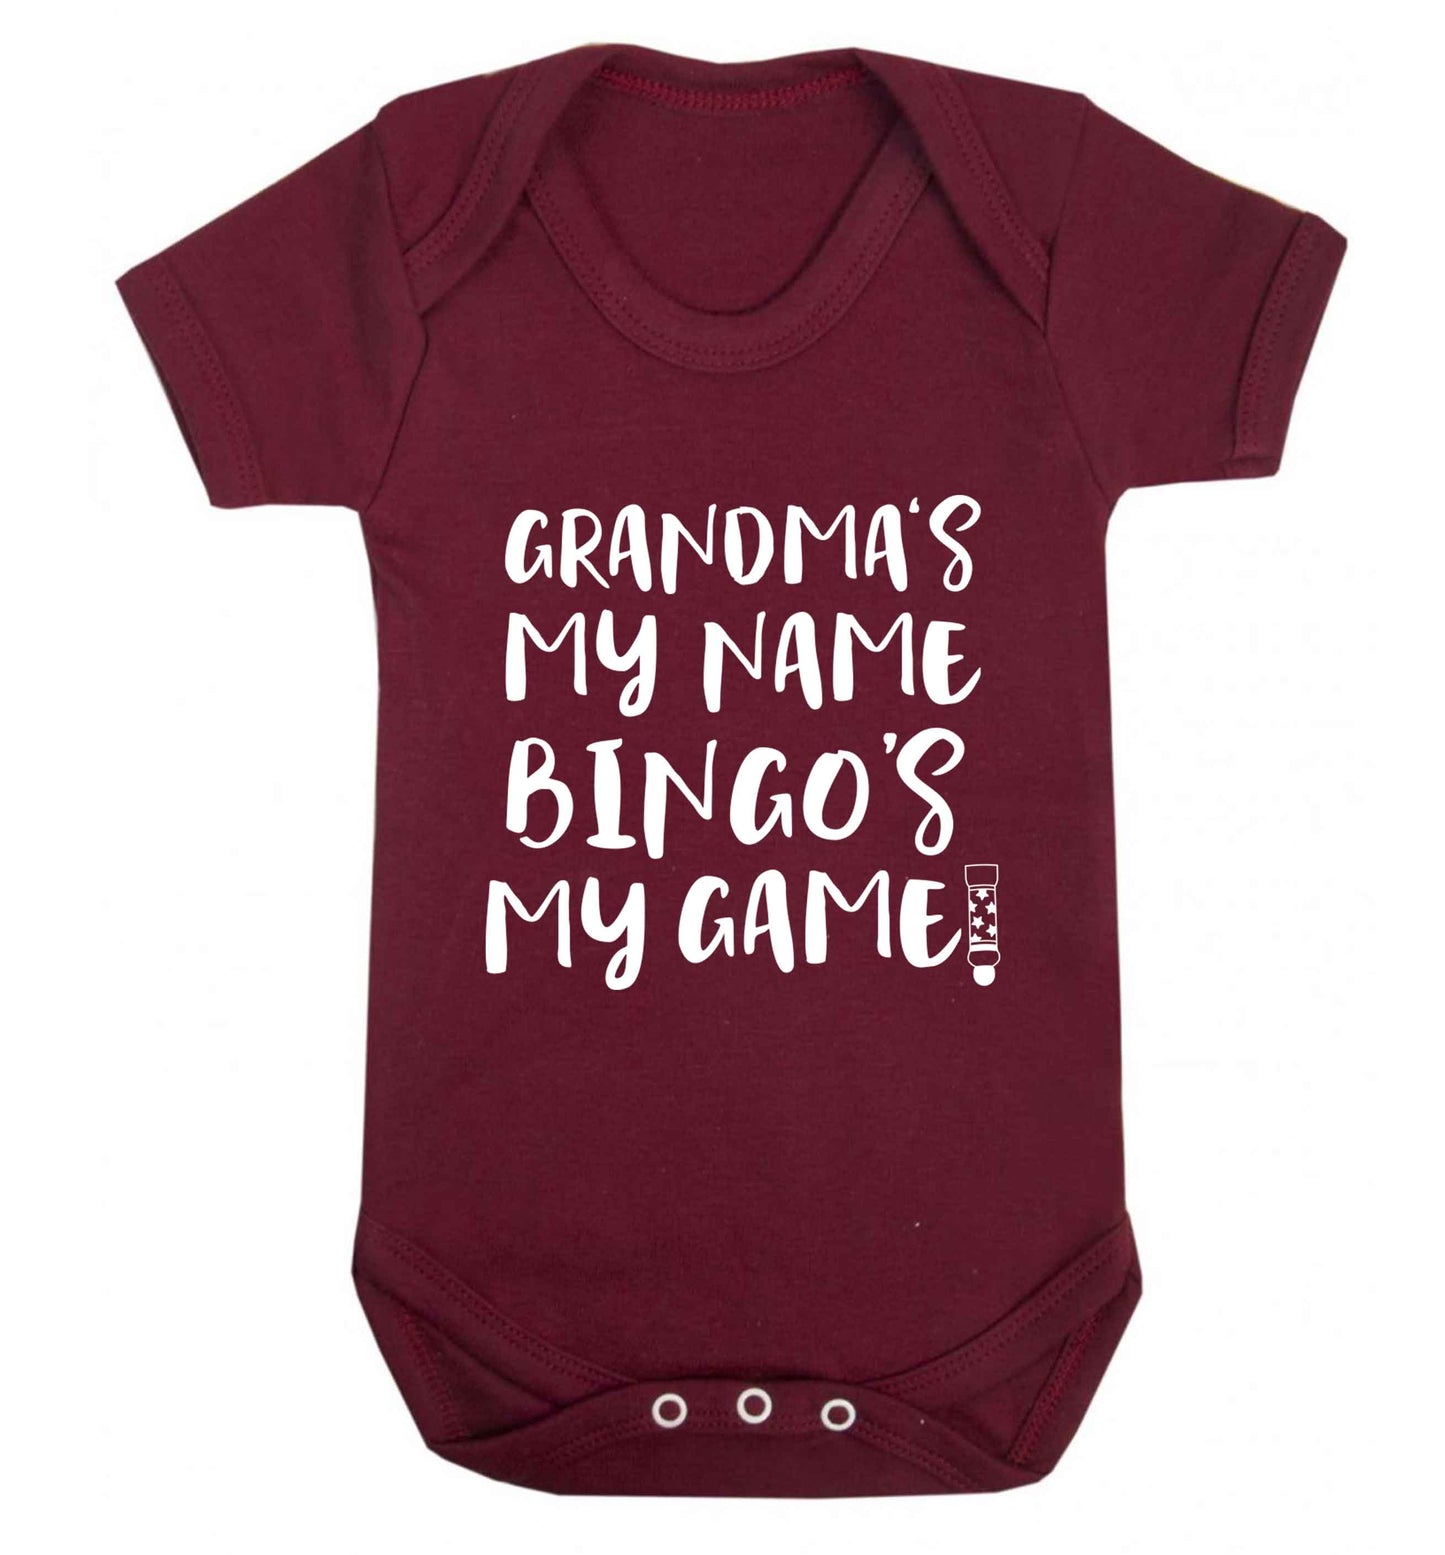 Grandma's my name bingo's my game! Baby Vest maroon 18-24 months